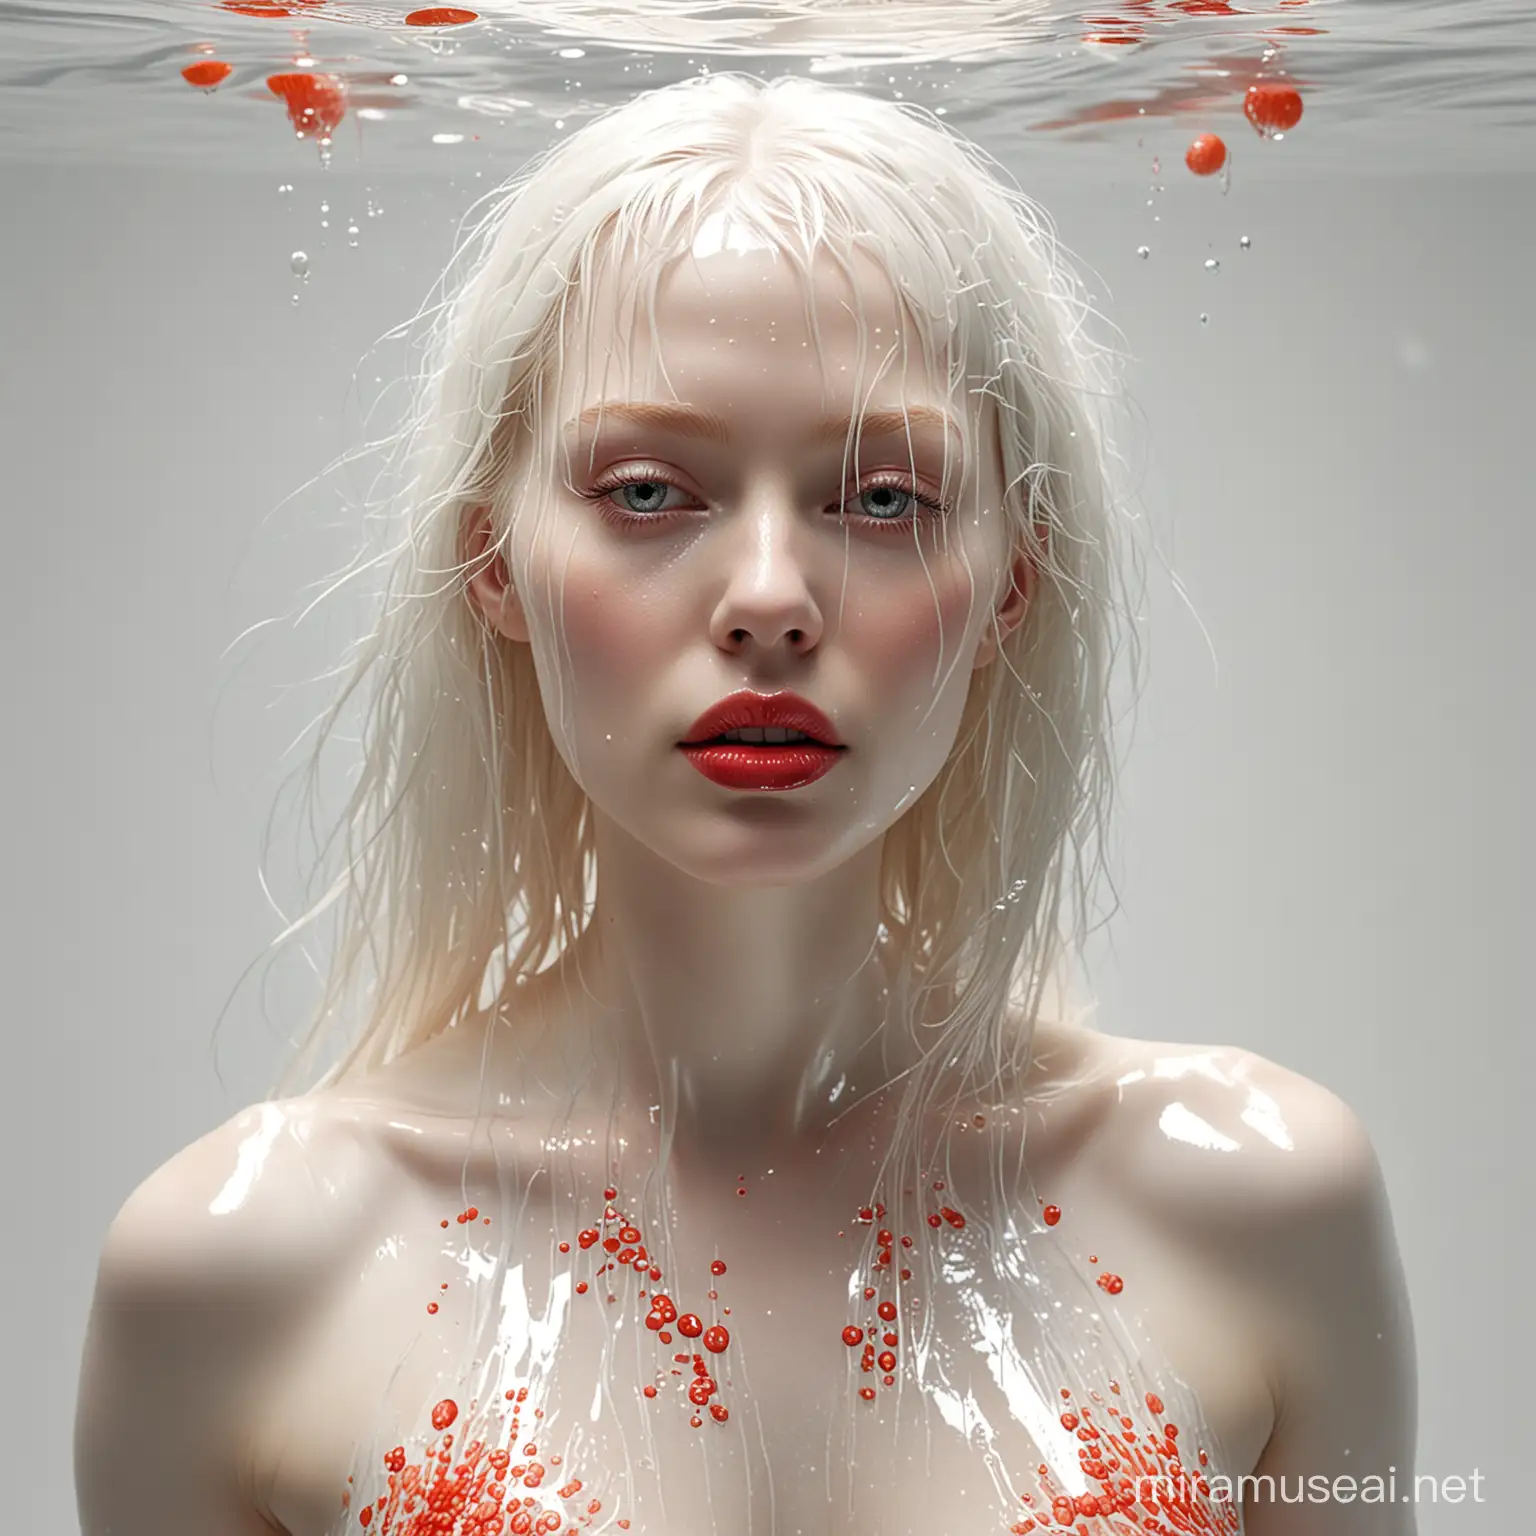 Albino Woman in Transparent Latex Leotard Sensual Wet Body Portrait